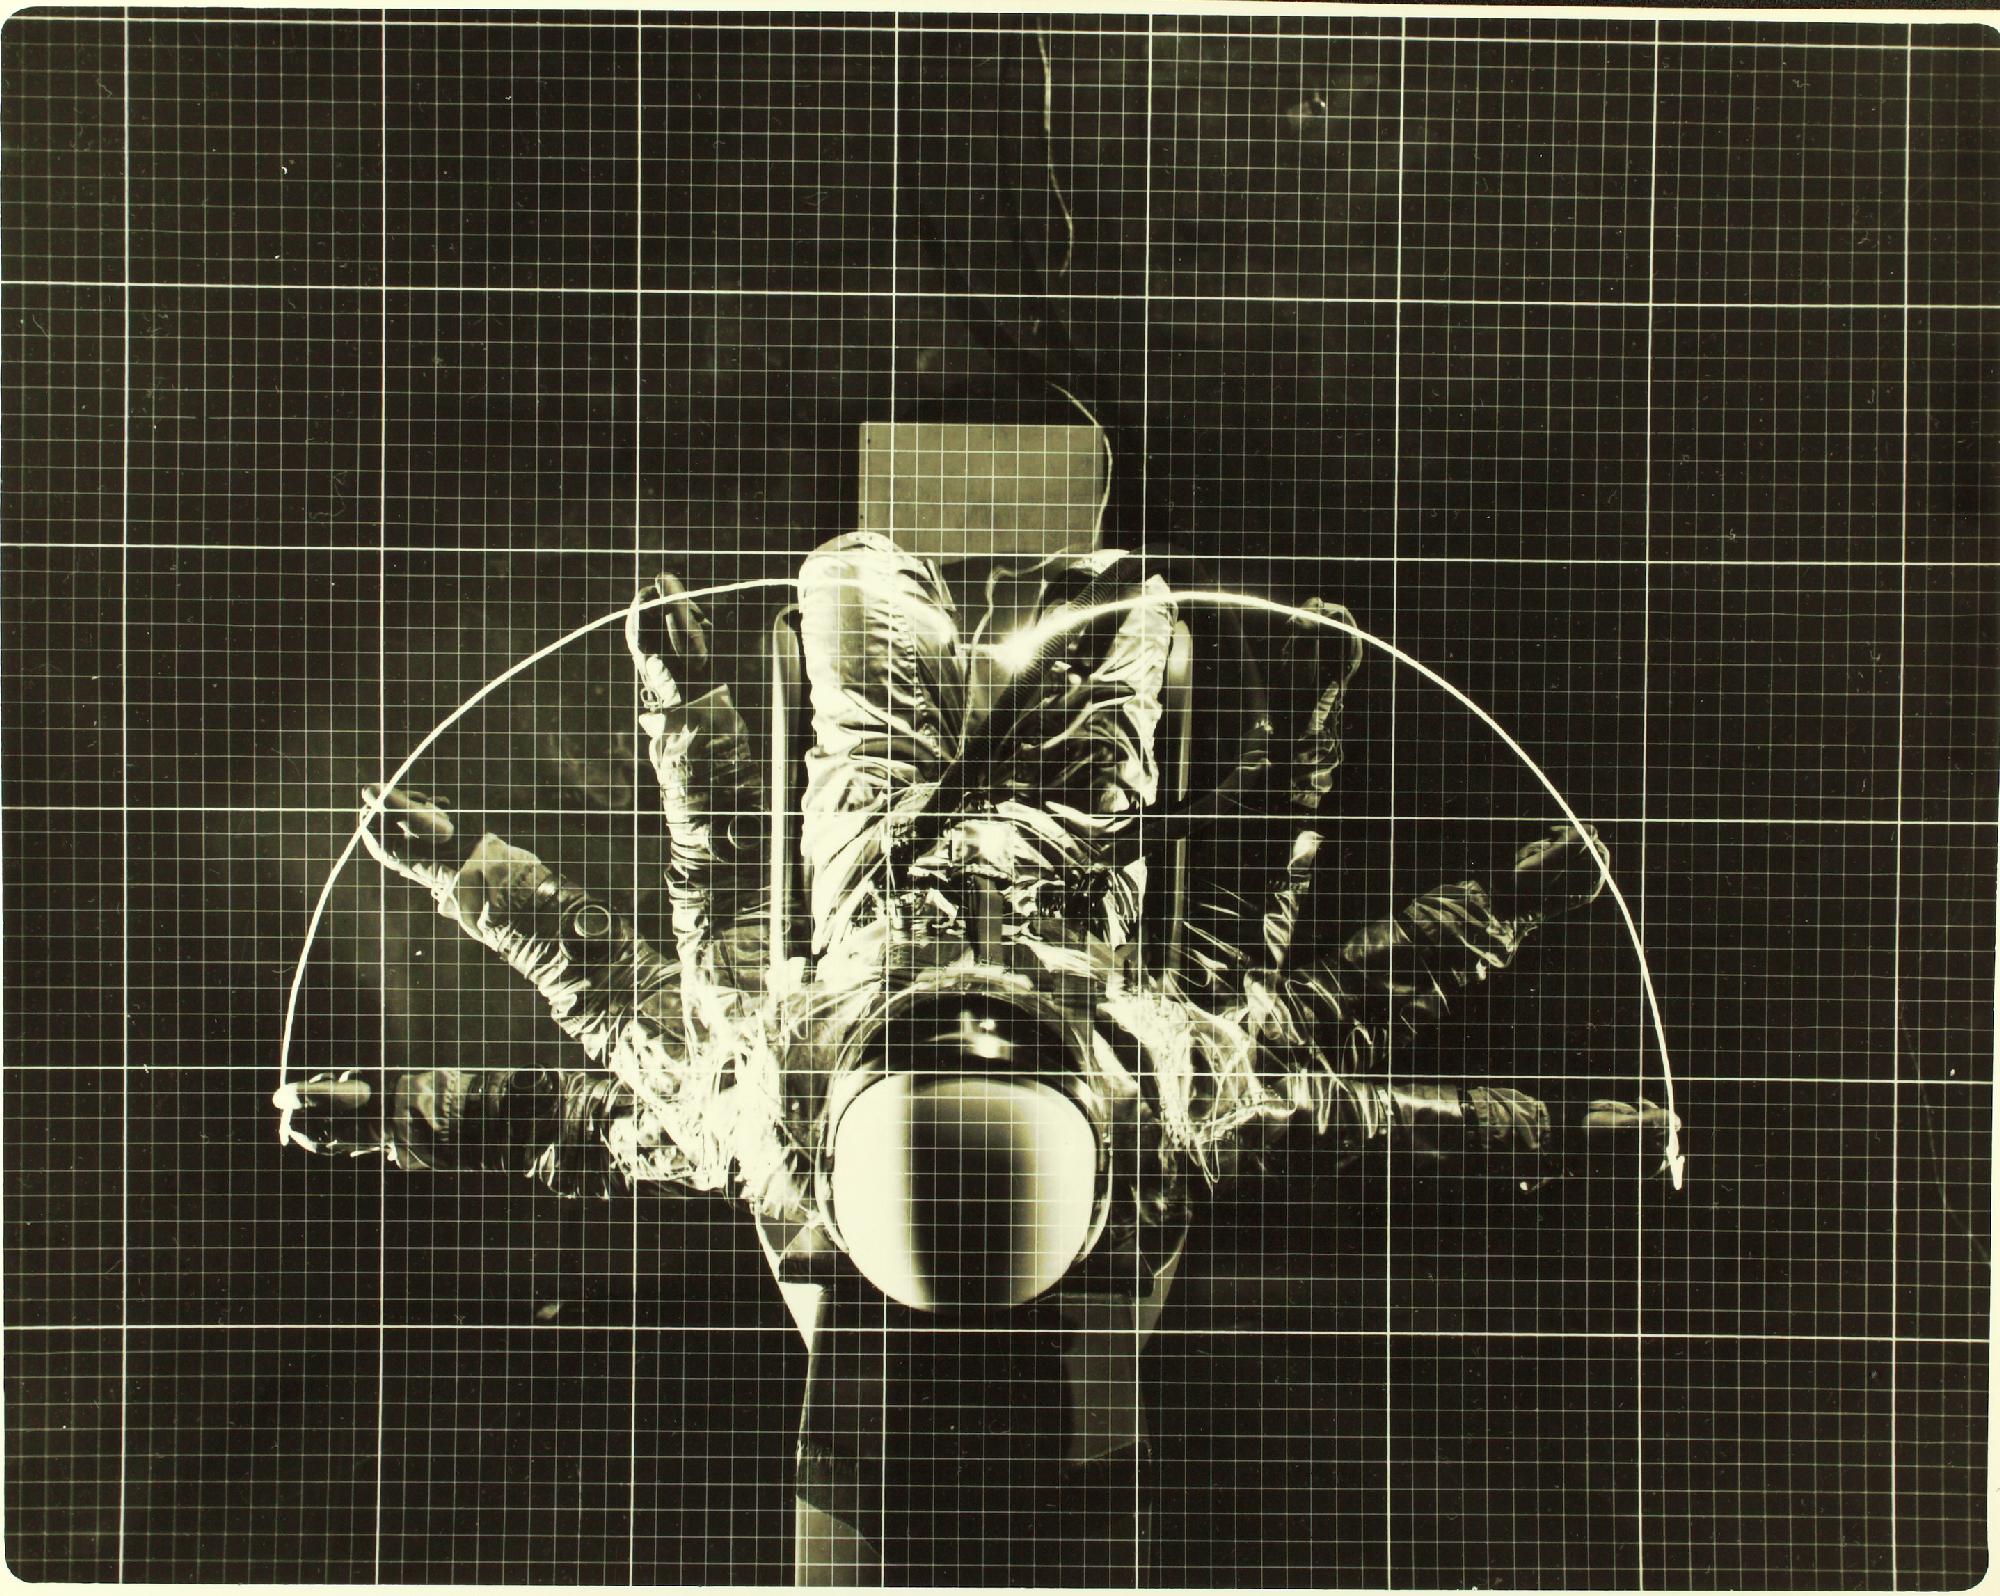 1960s-Astronaut_Training001